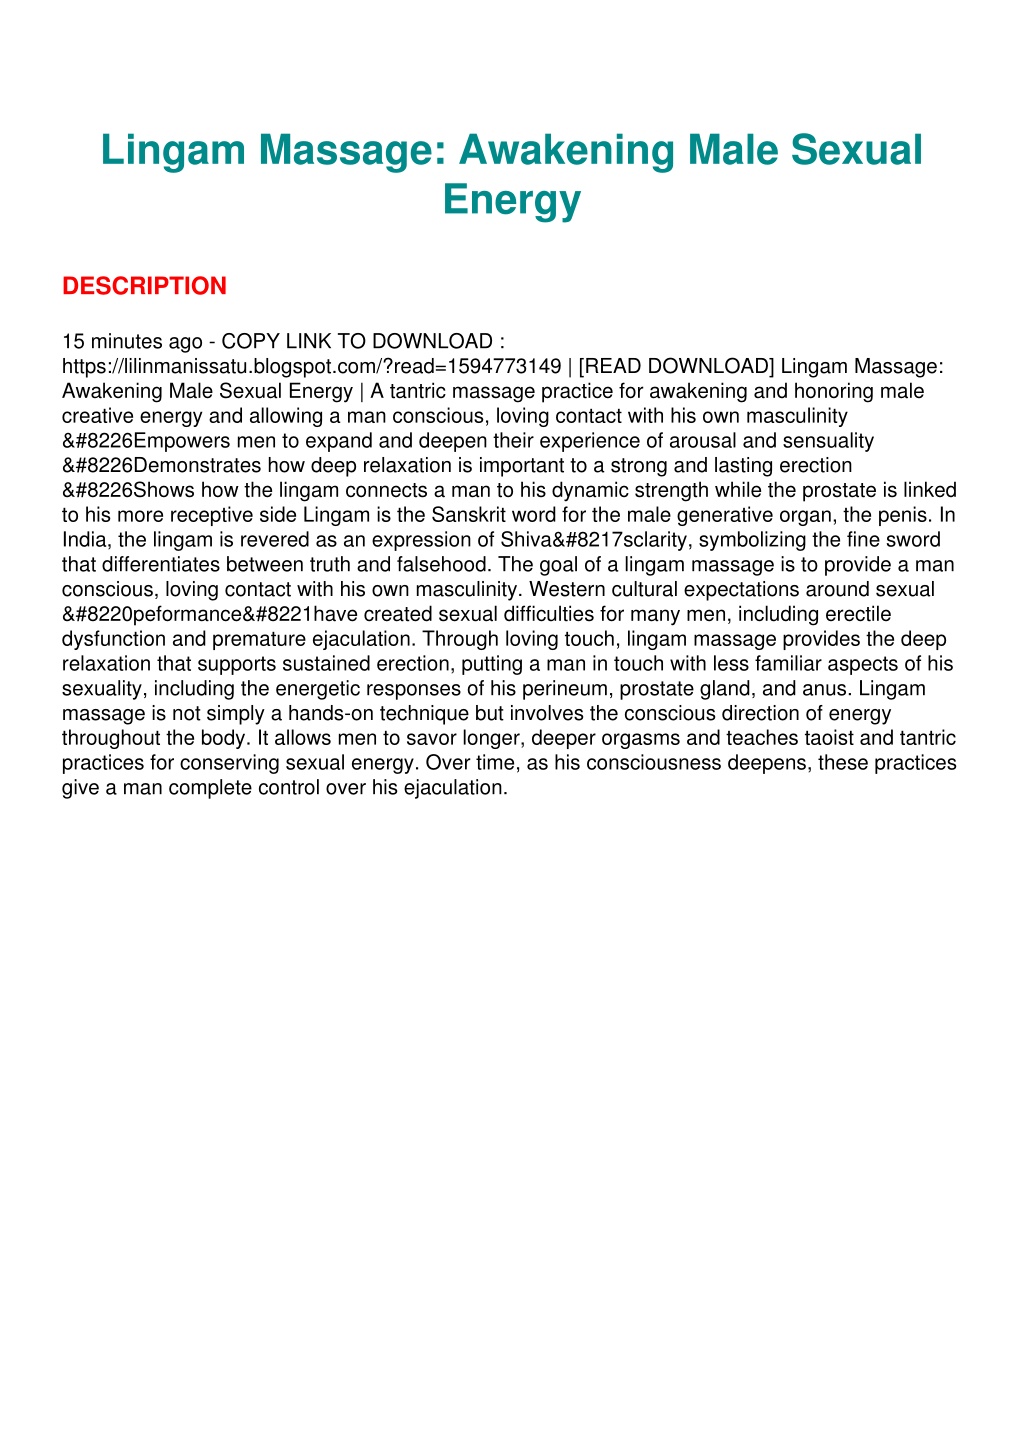 Ppt Pdf Lingam Massage Awakening Male Sexual Energy Ebooks Powerpoint Presentation Id 12570511